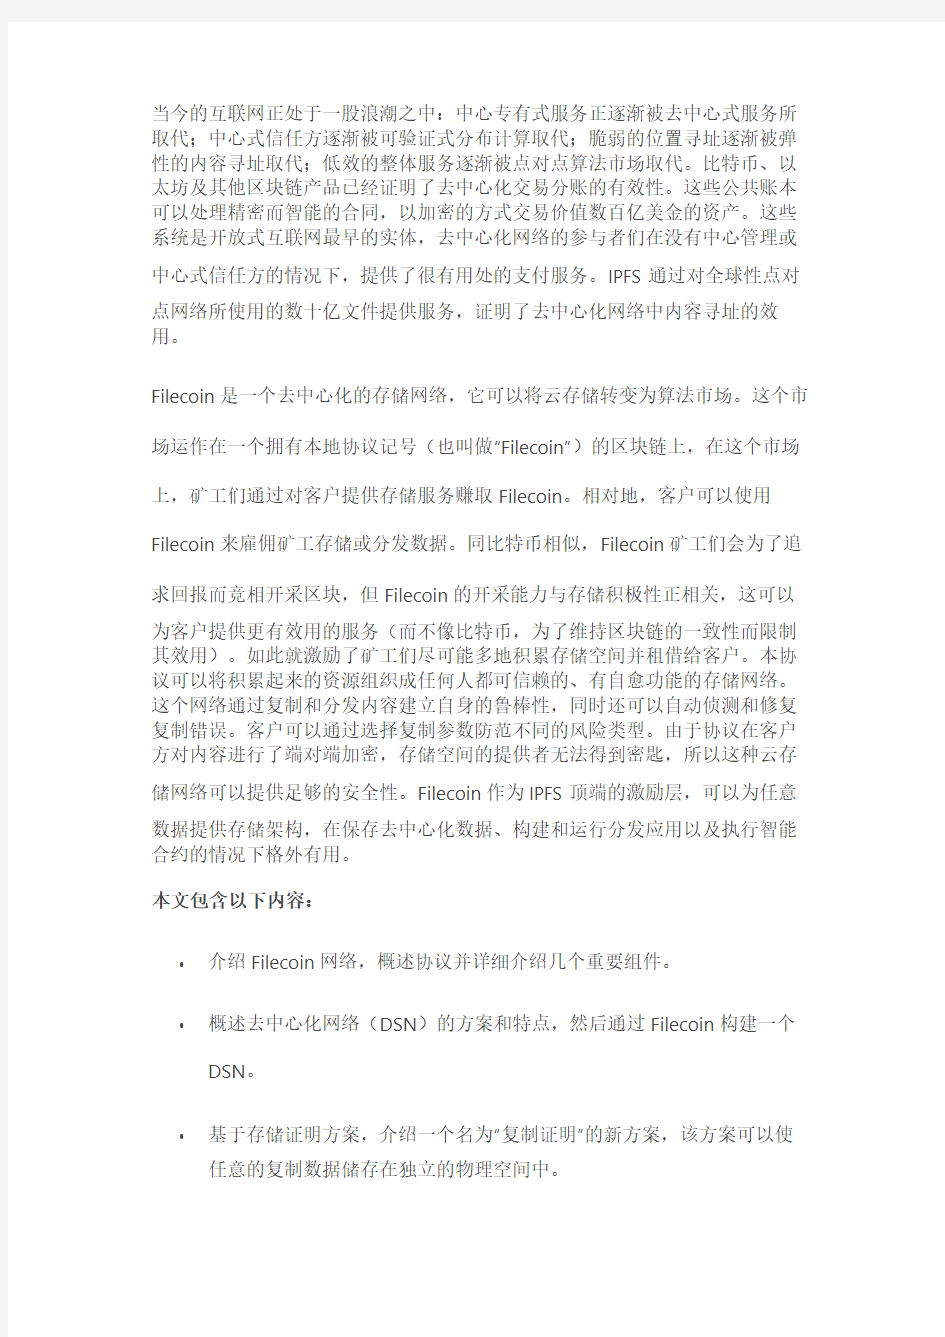 Filecoin 白皮书 中文版